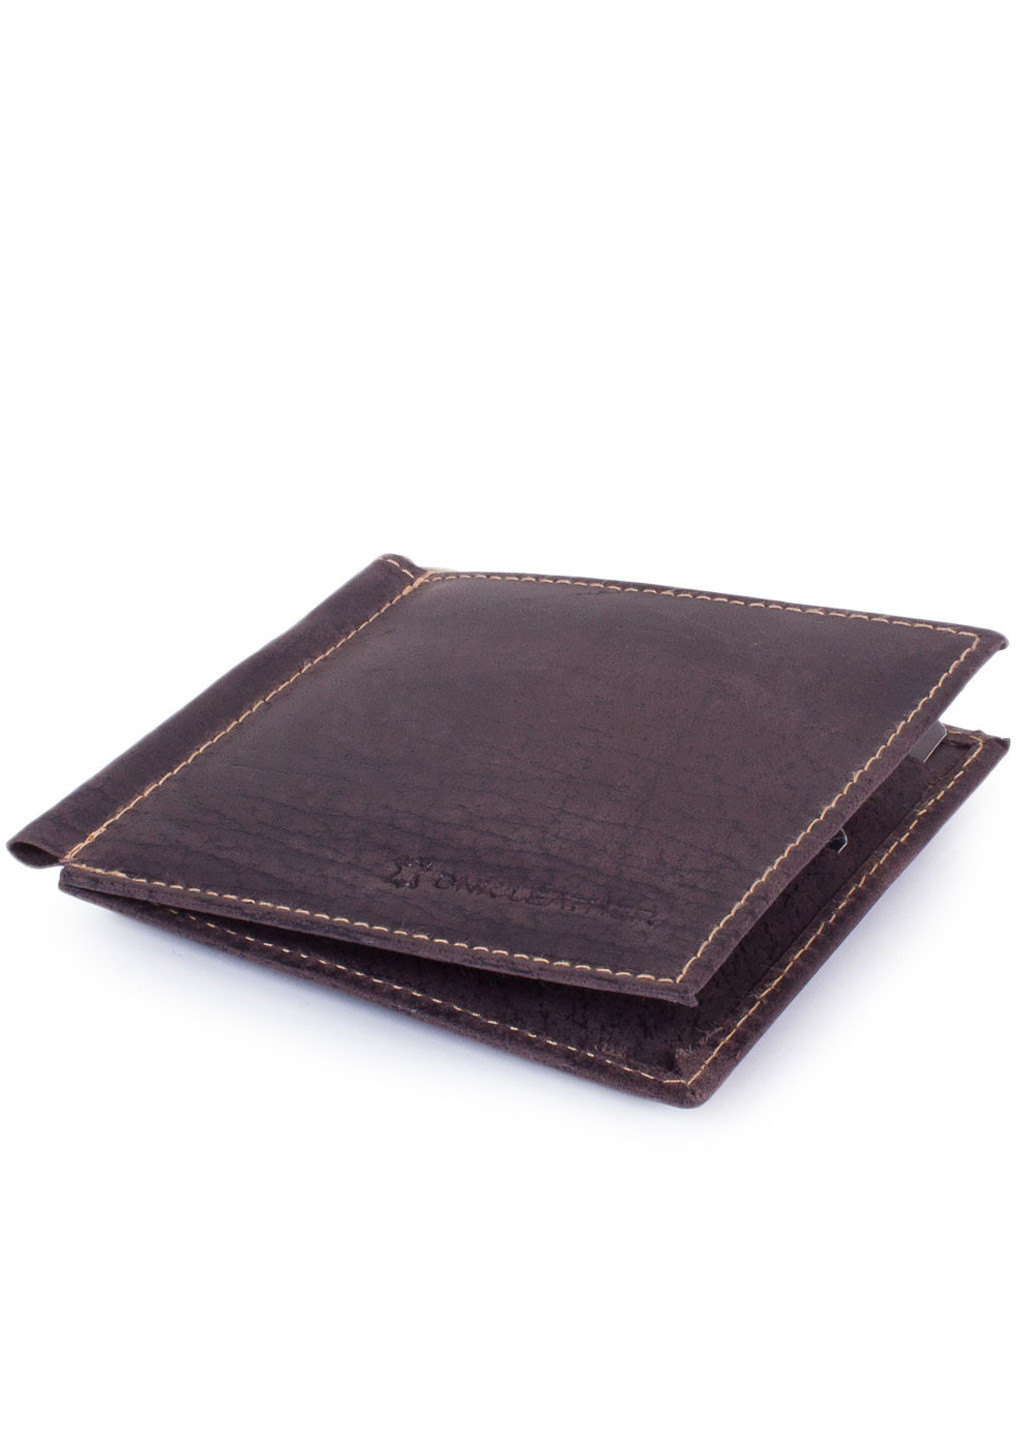 Мужской кожаный зажим для купюр 11х9,5х0,5 см DNK Leather (195771905)